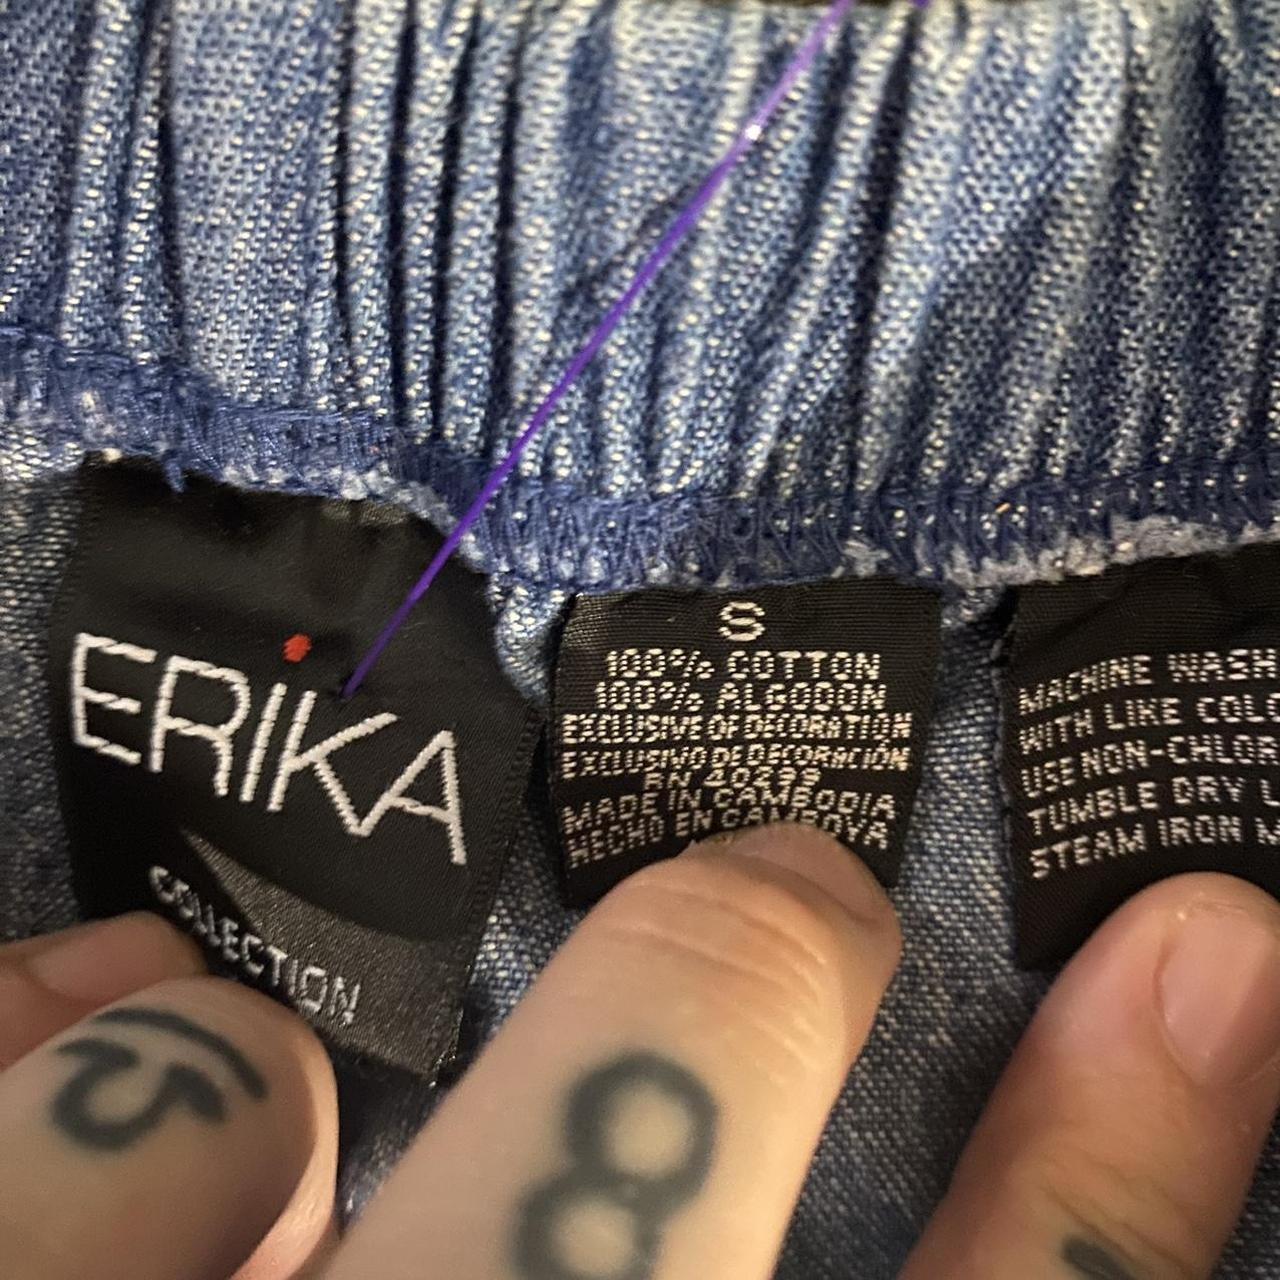 Erika vintage capris 100% cotton size small trie to... - Depop